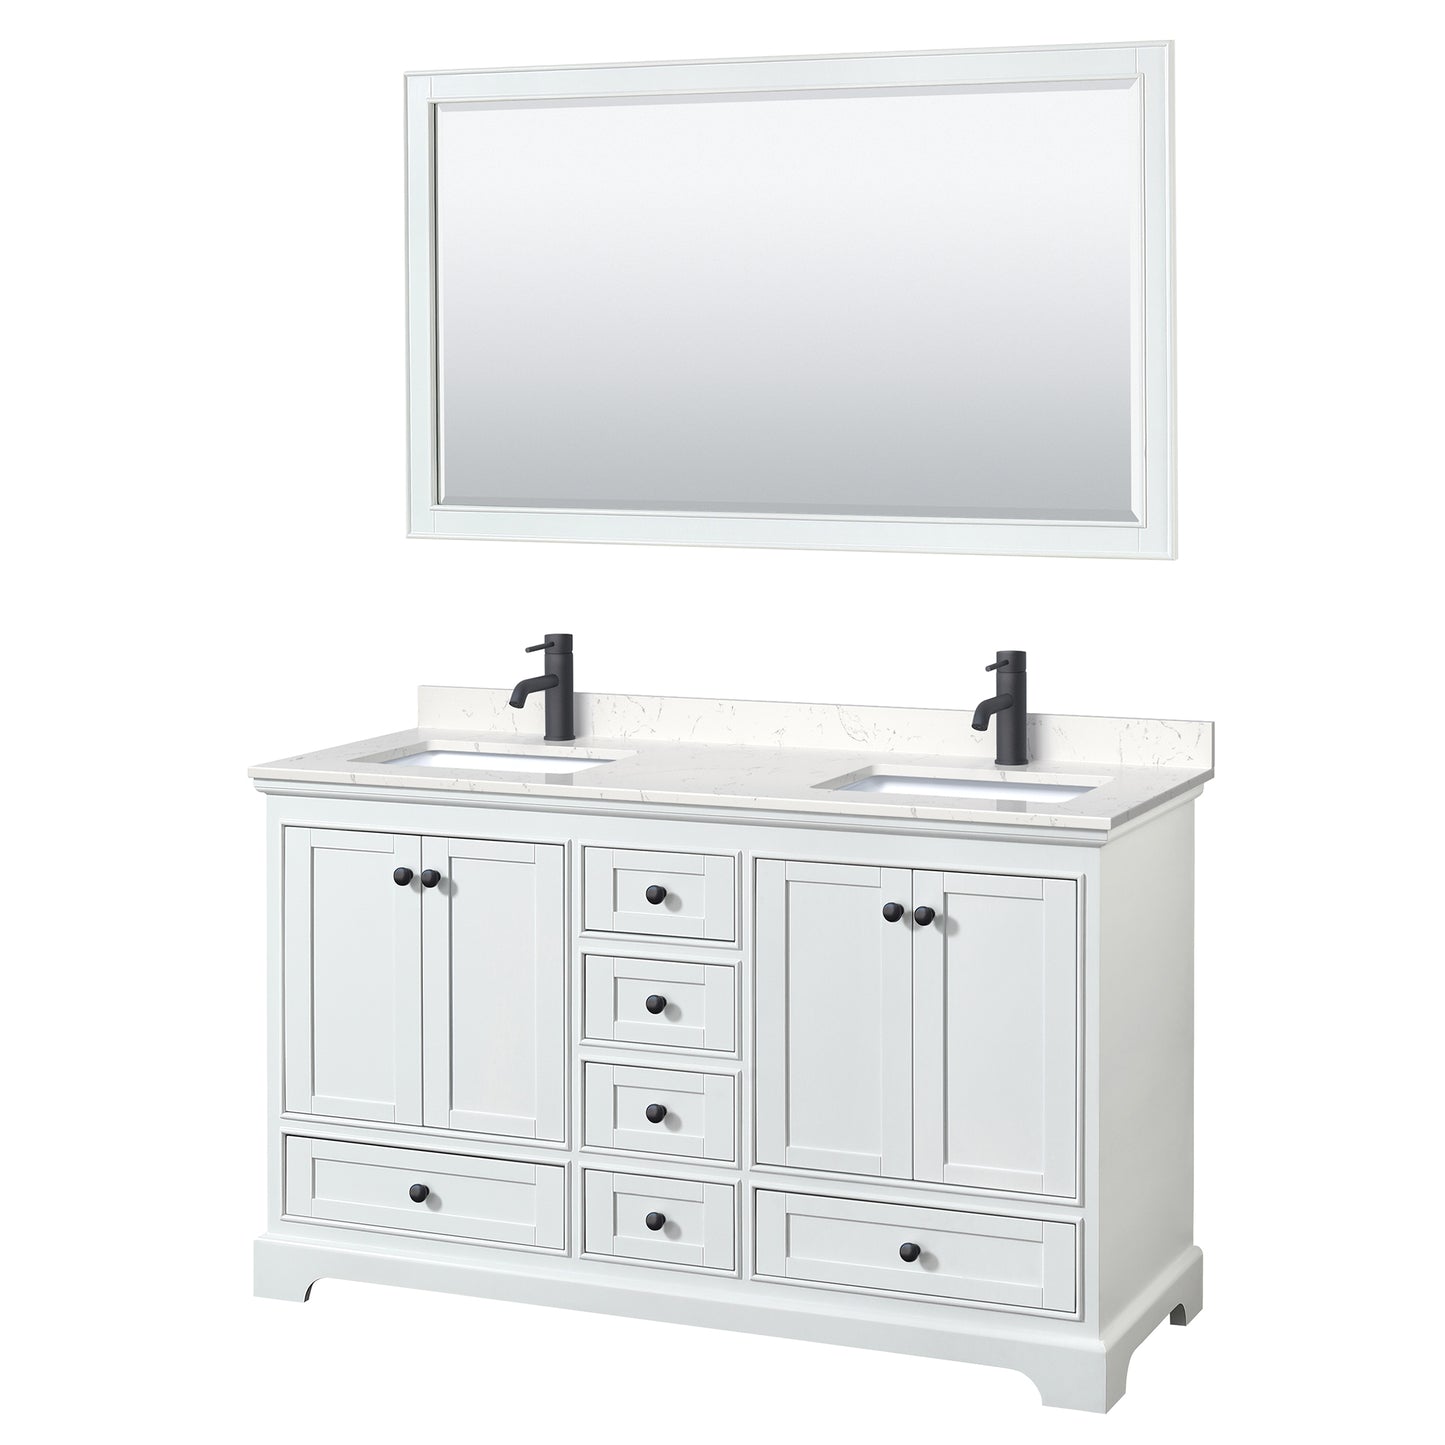 Wyndham Deborah 60 Inch Double Bathroom Vanity Carrara Cultured Marble Countertop, Undermount Square Sinks in Matte Black Trim with 58 Inch Mirror - Luxe Bathroom Vanities